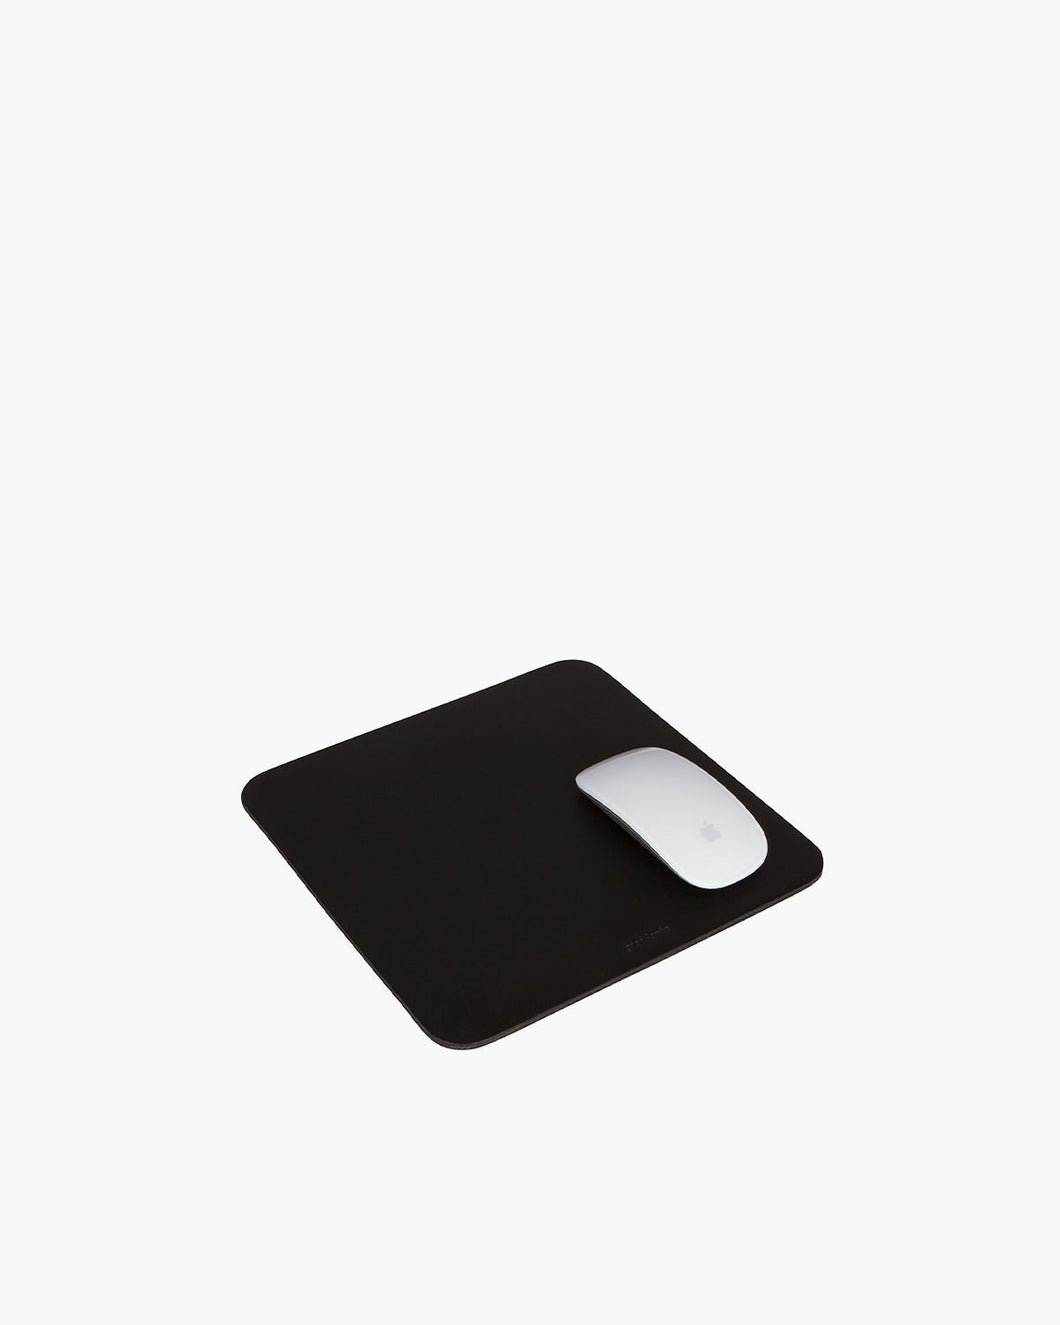 Mausu Mouse Pad Square Leather/Felt Granite